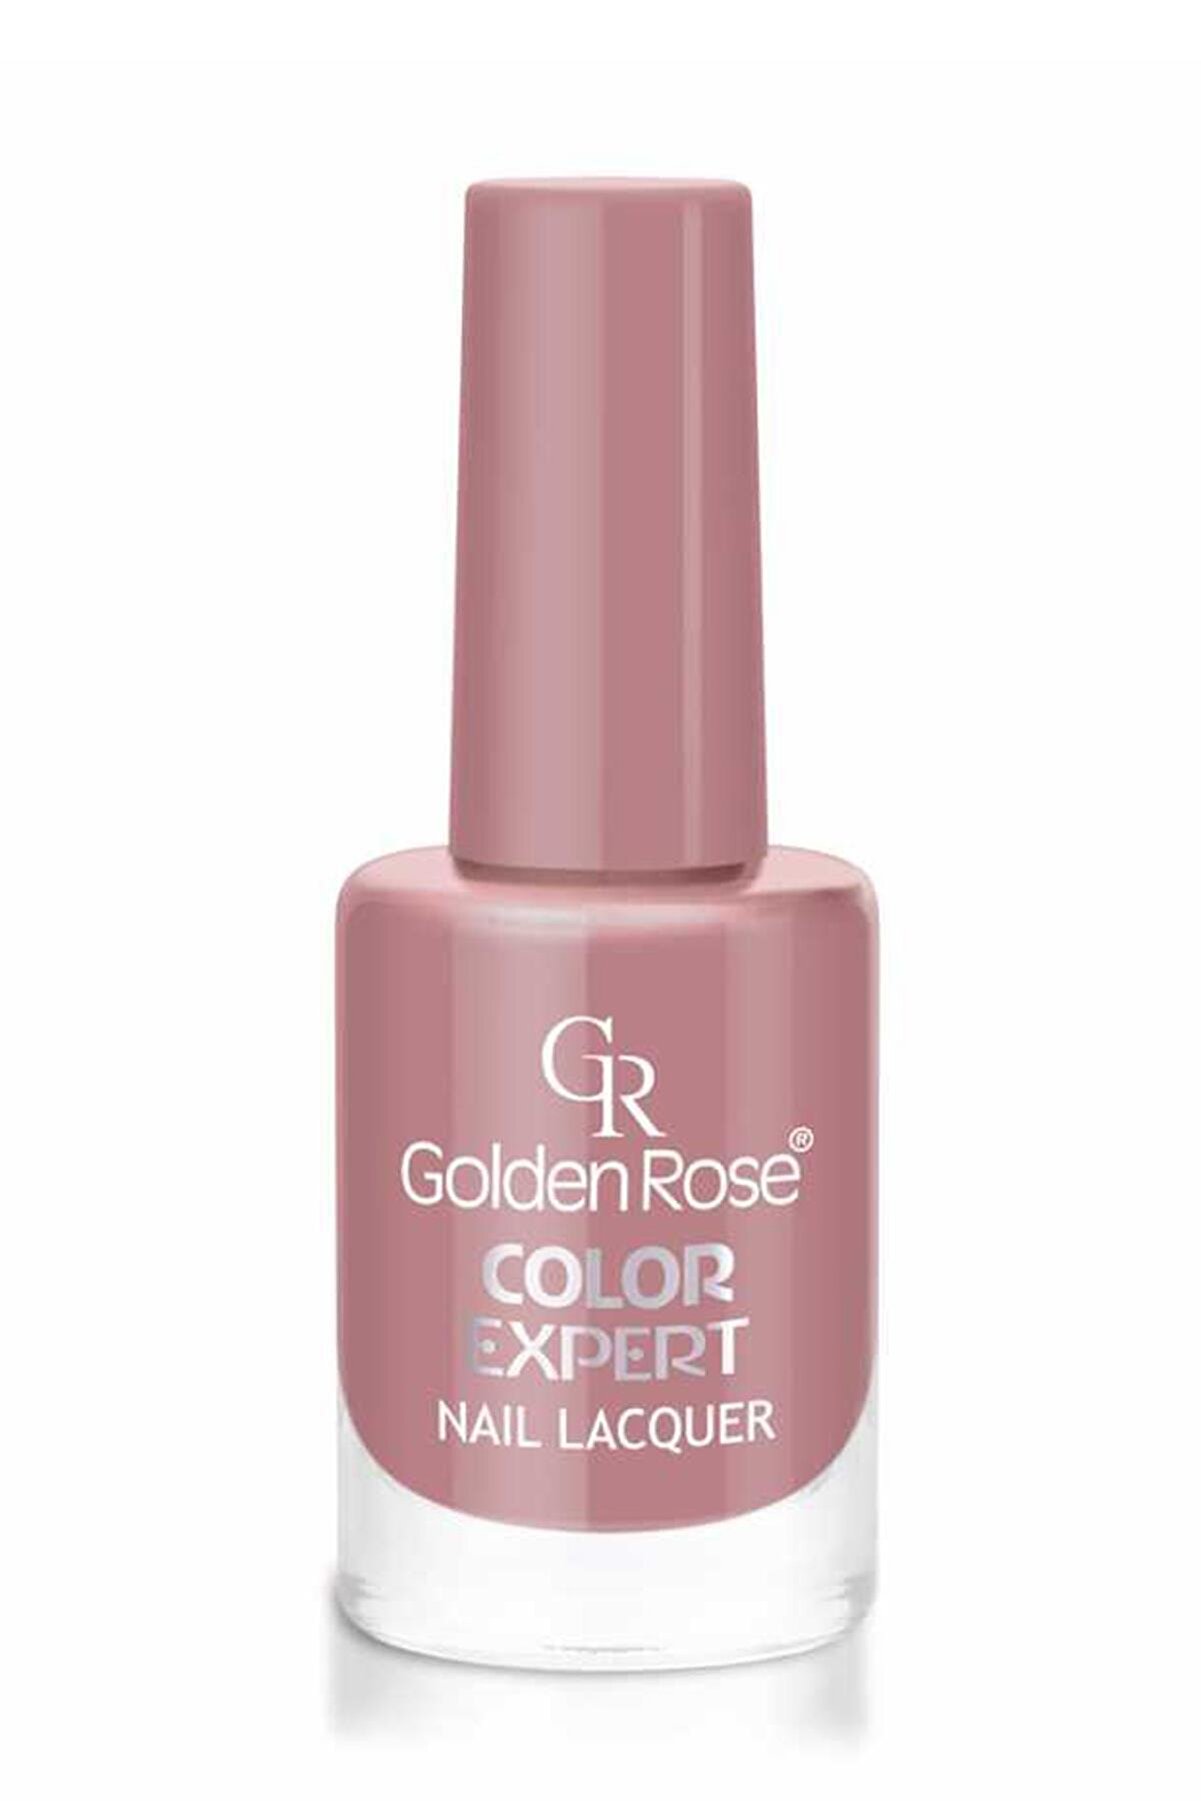 Golden Rose Oje - Color Expert Nail Lacquer No: 102 8691190837020